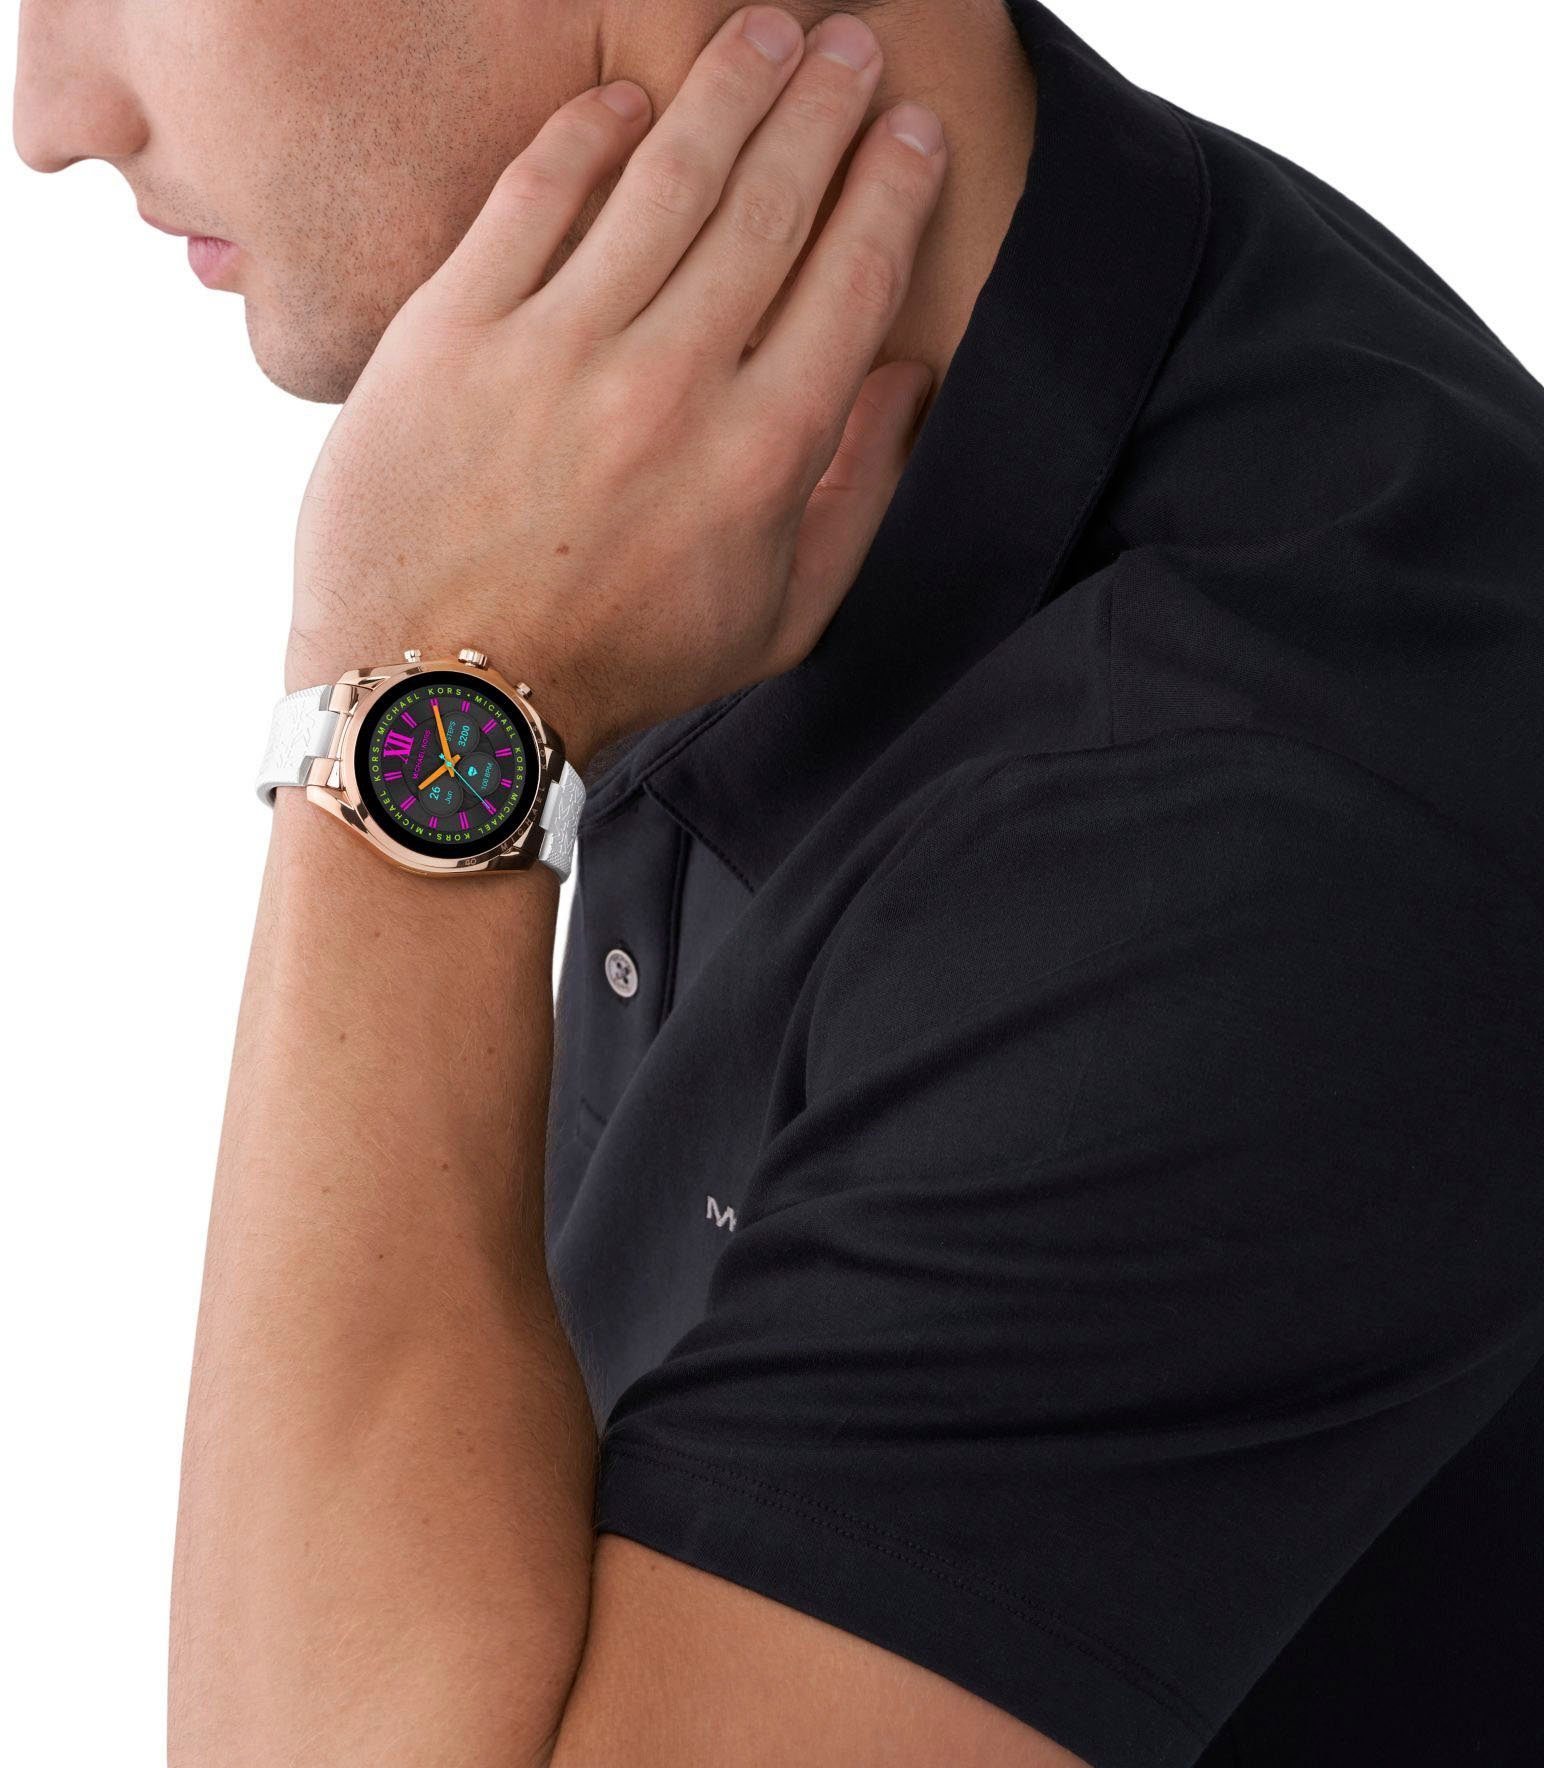 MKT5153 Smartwatch Google) 6 OS ACCESS BRADSHAW, by KORS MICHAEL GEN (Wear